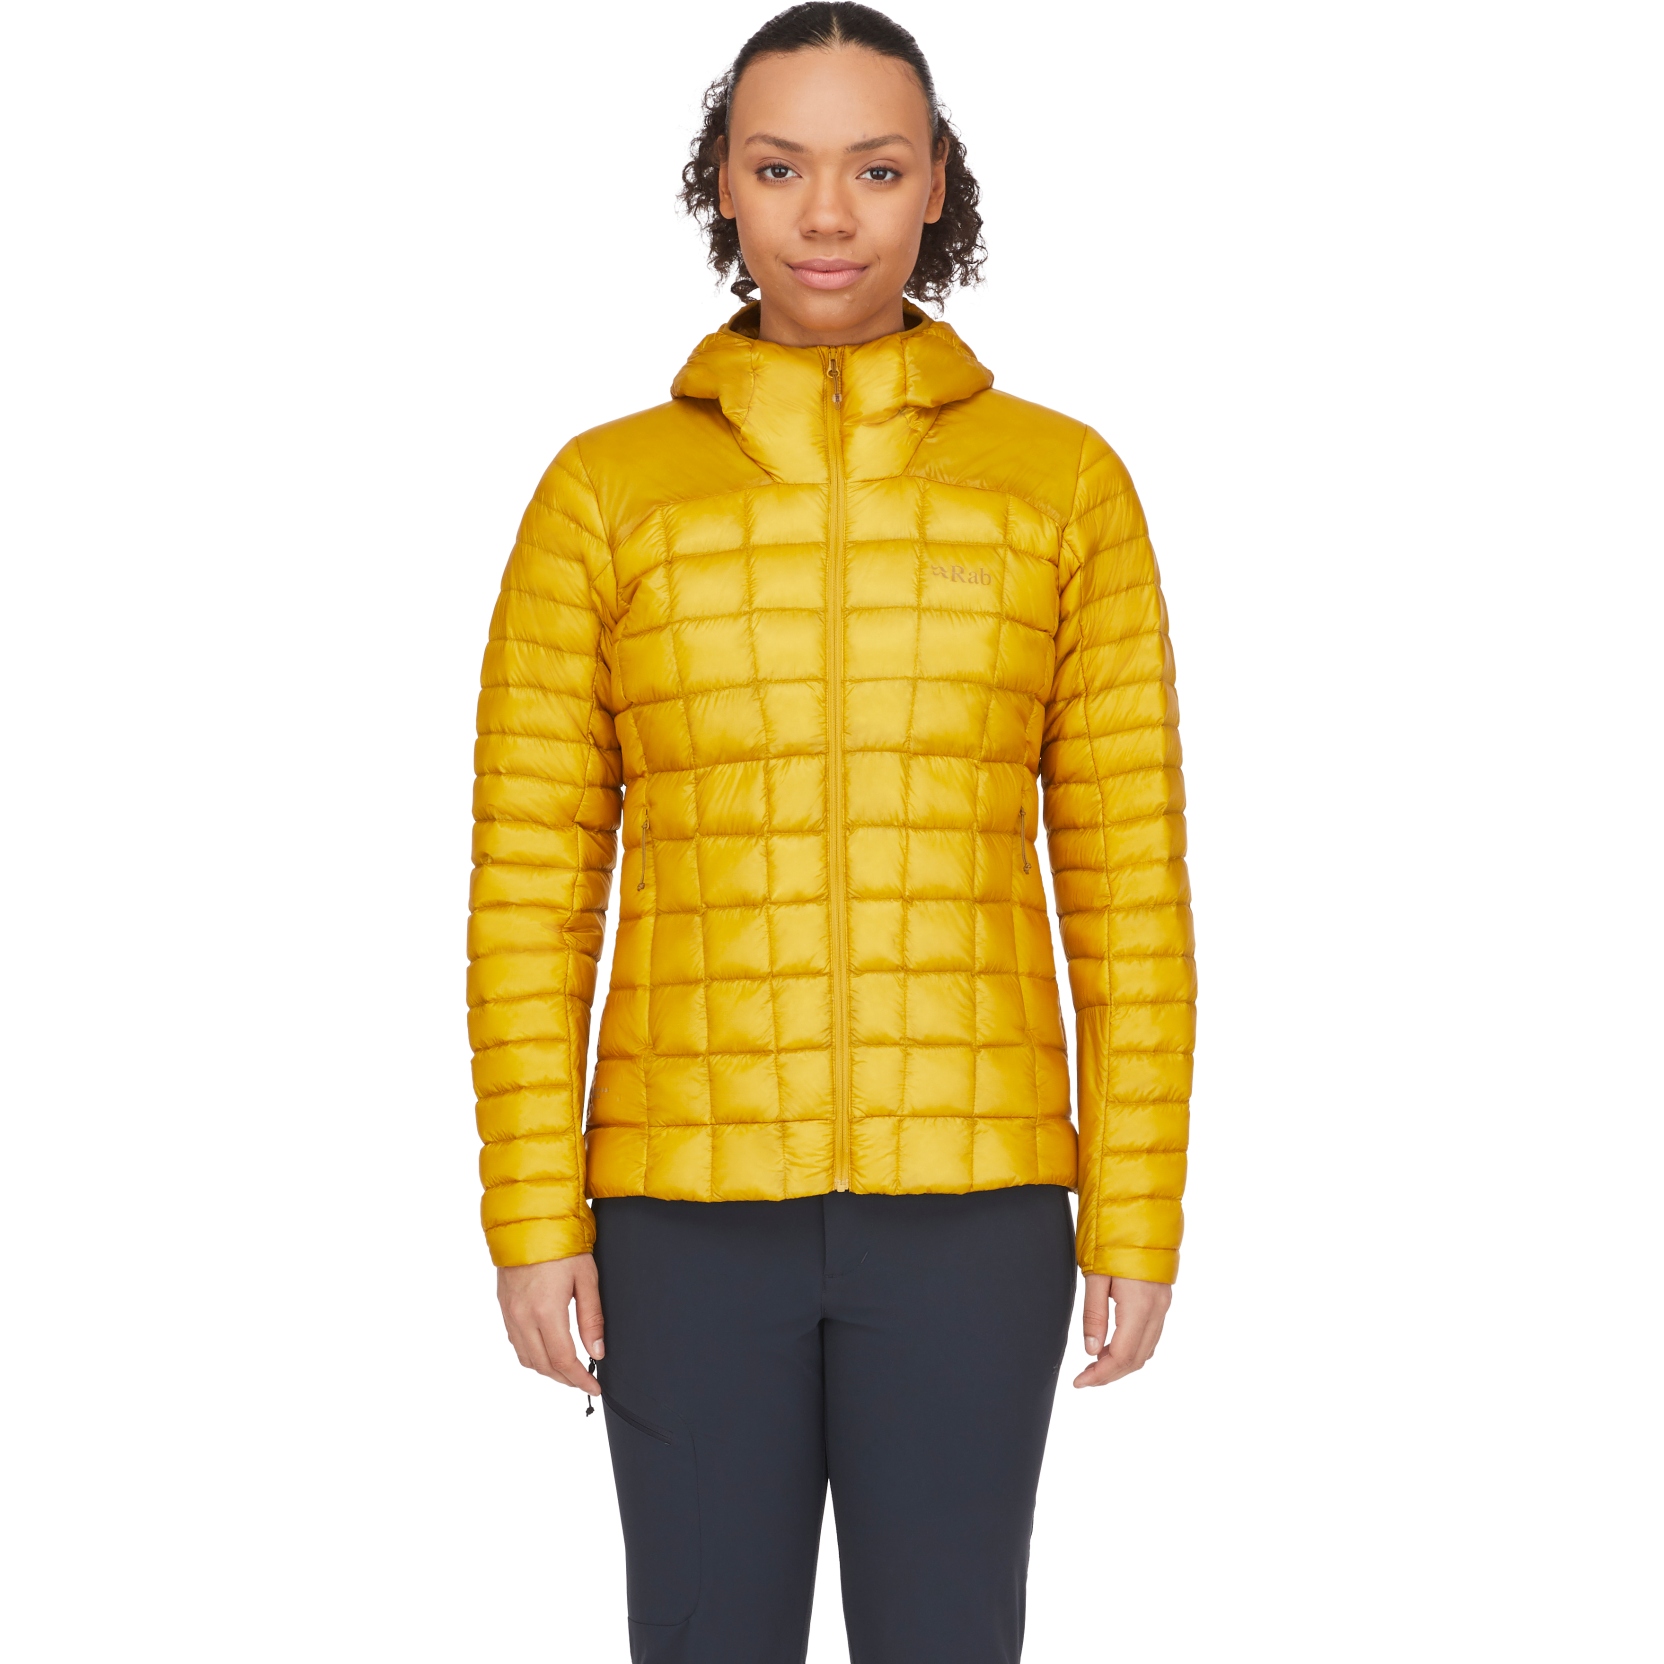 Womens Talus Primaloft Jacket // Thermal Jacket for Ladies